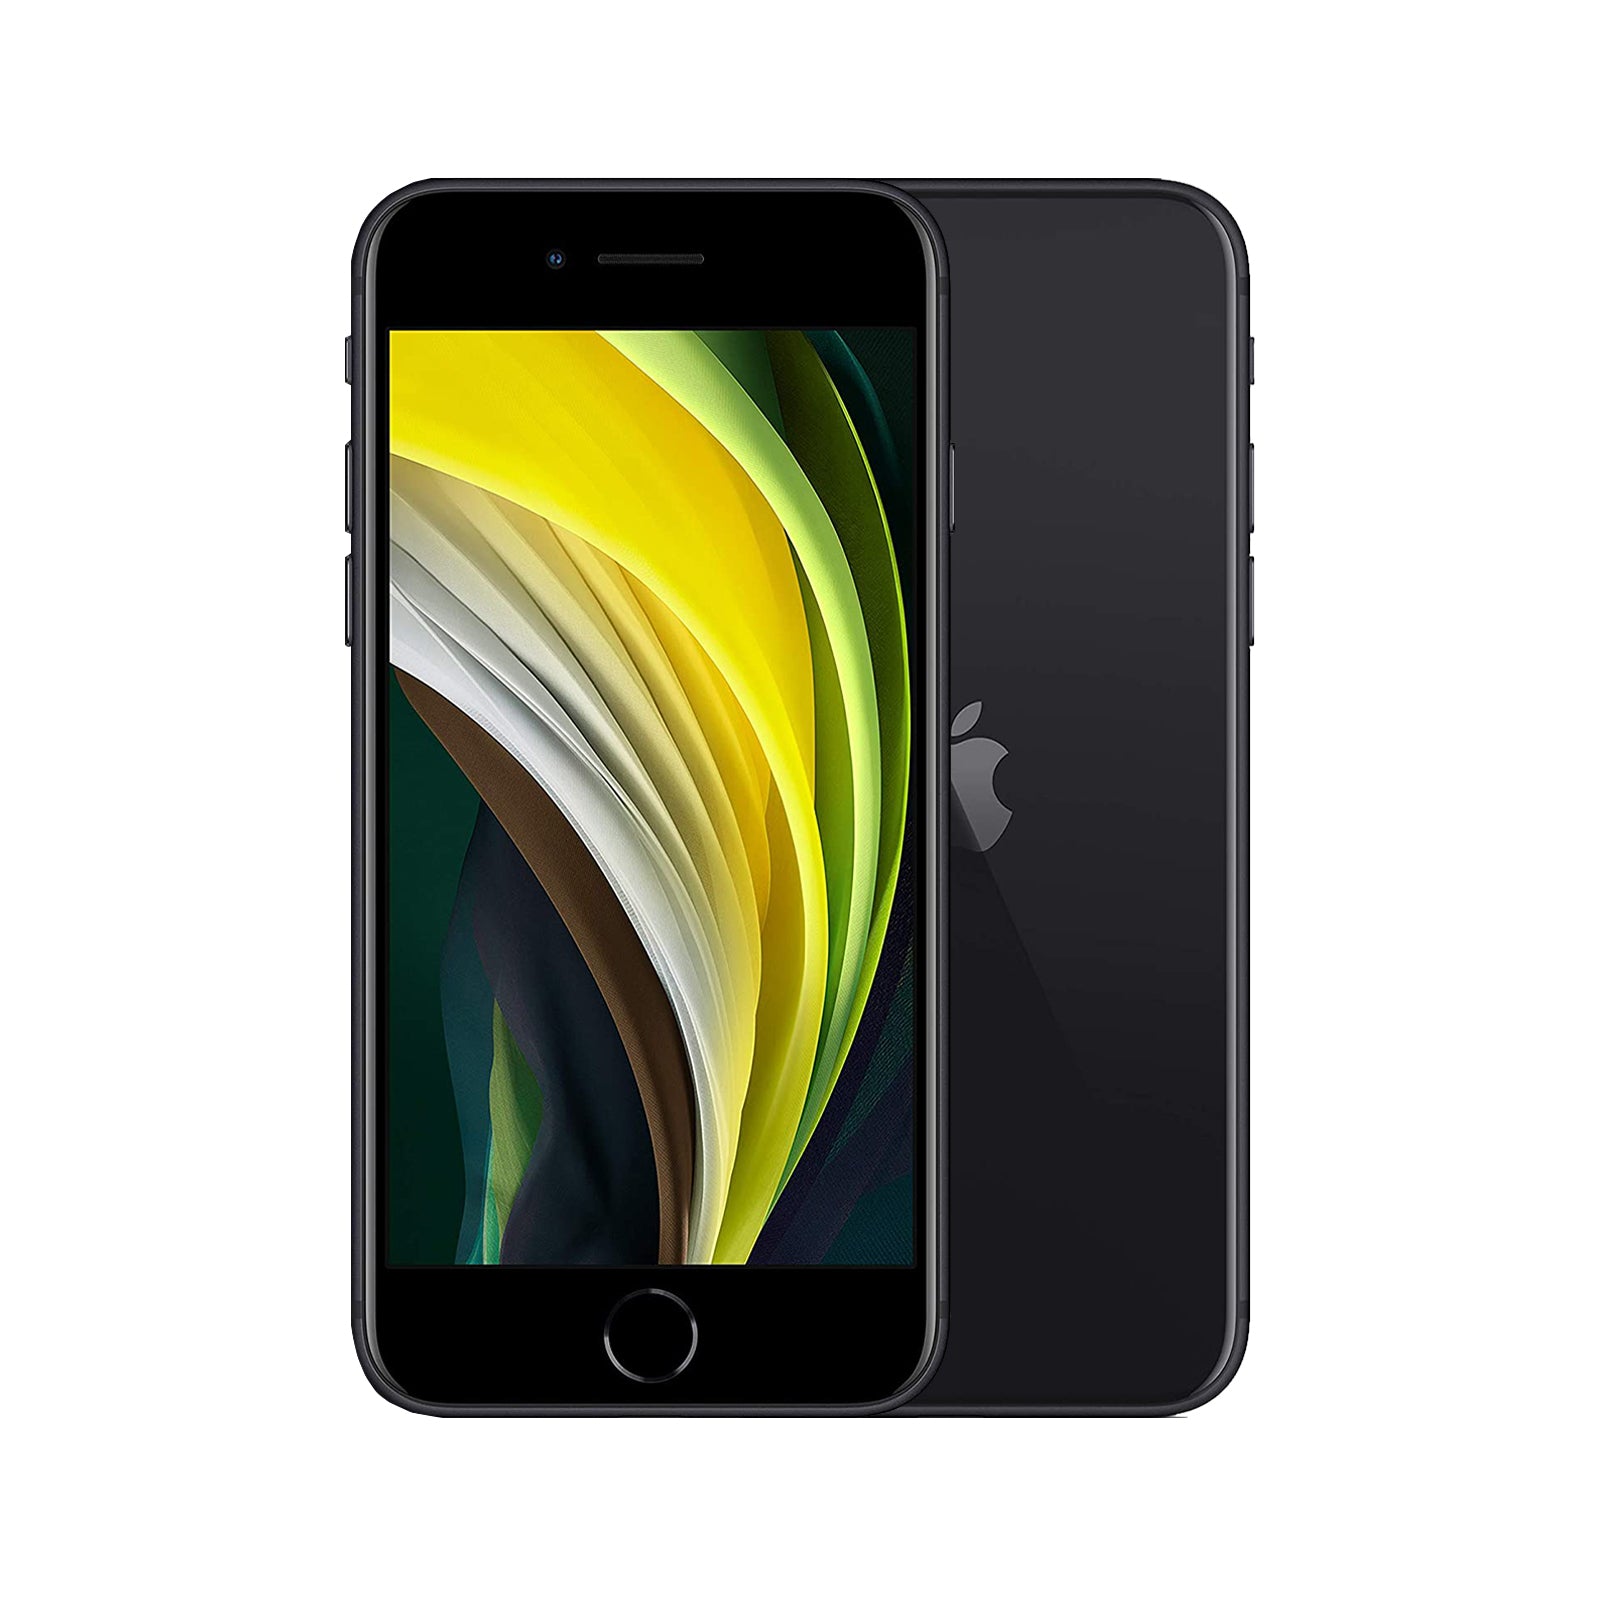 Apple iPhone SE (2020) 128GB Black - Good - Refurbished